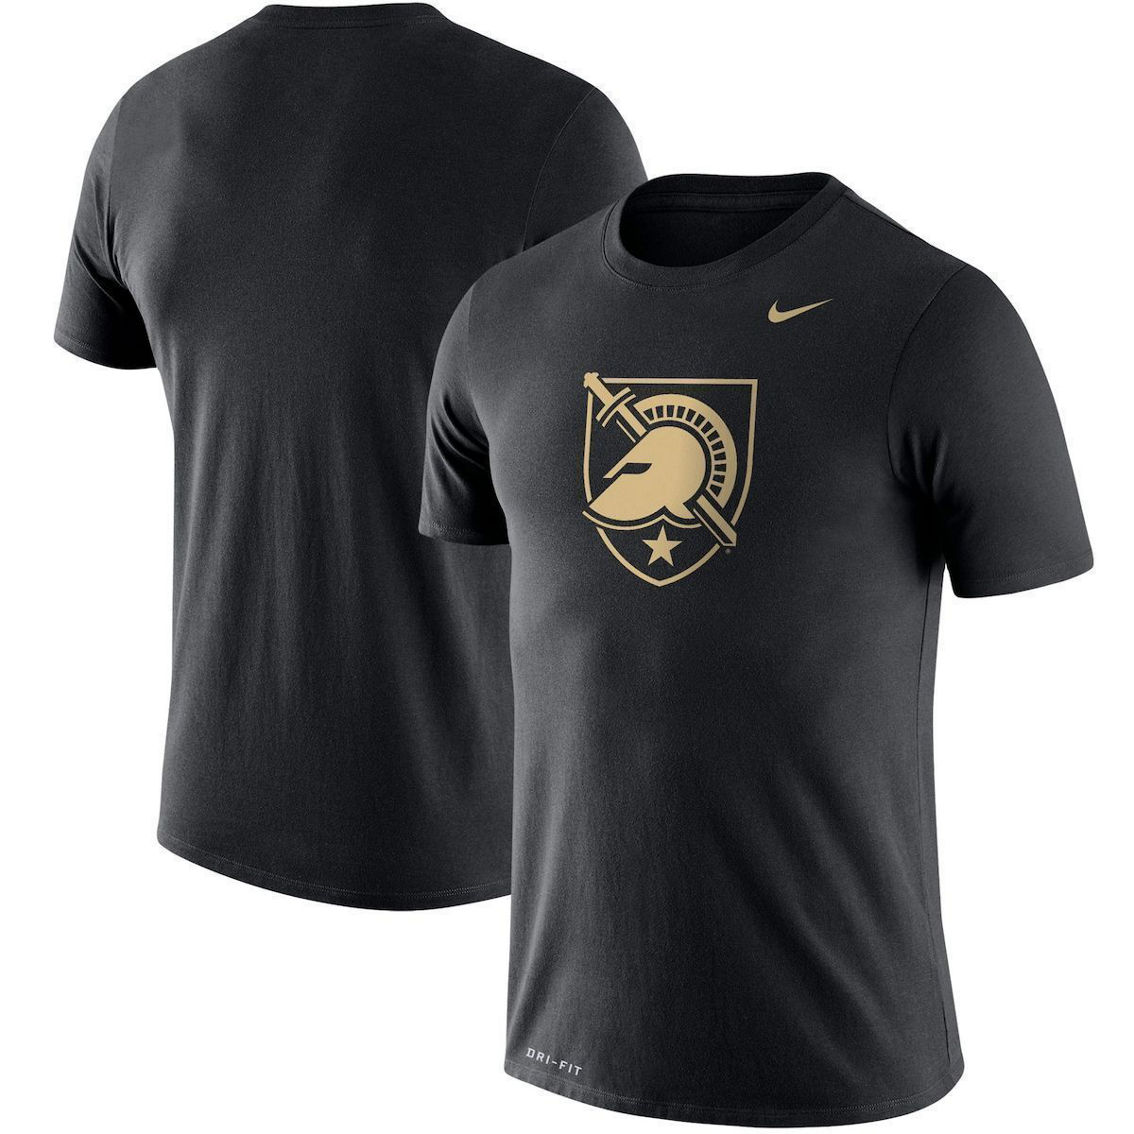 Men's Nike Black Army Black Knights Big & Tall Legend Primary Logo Performance T-Shirt - Image 1 of 4